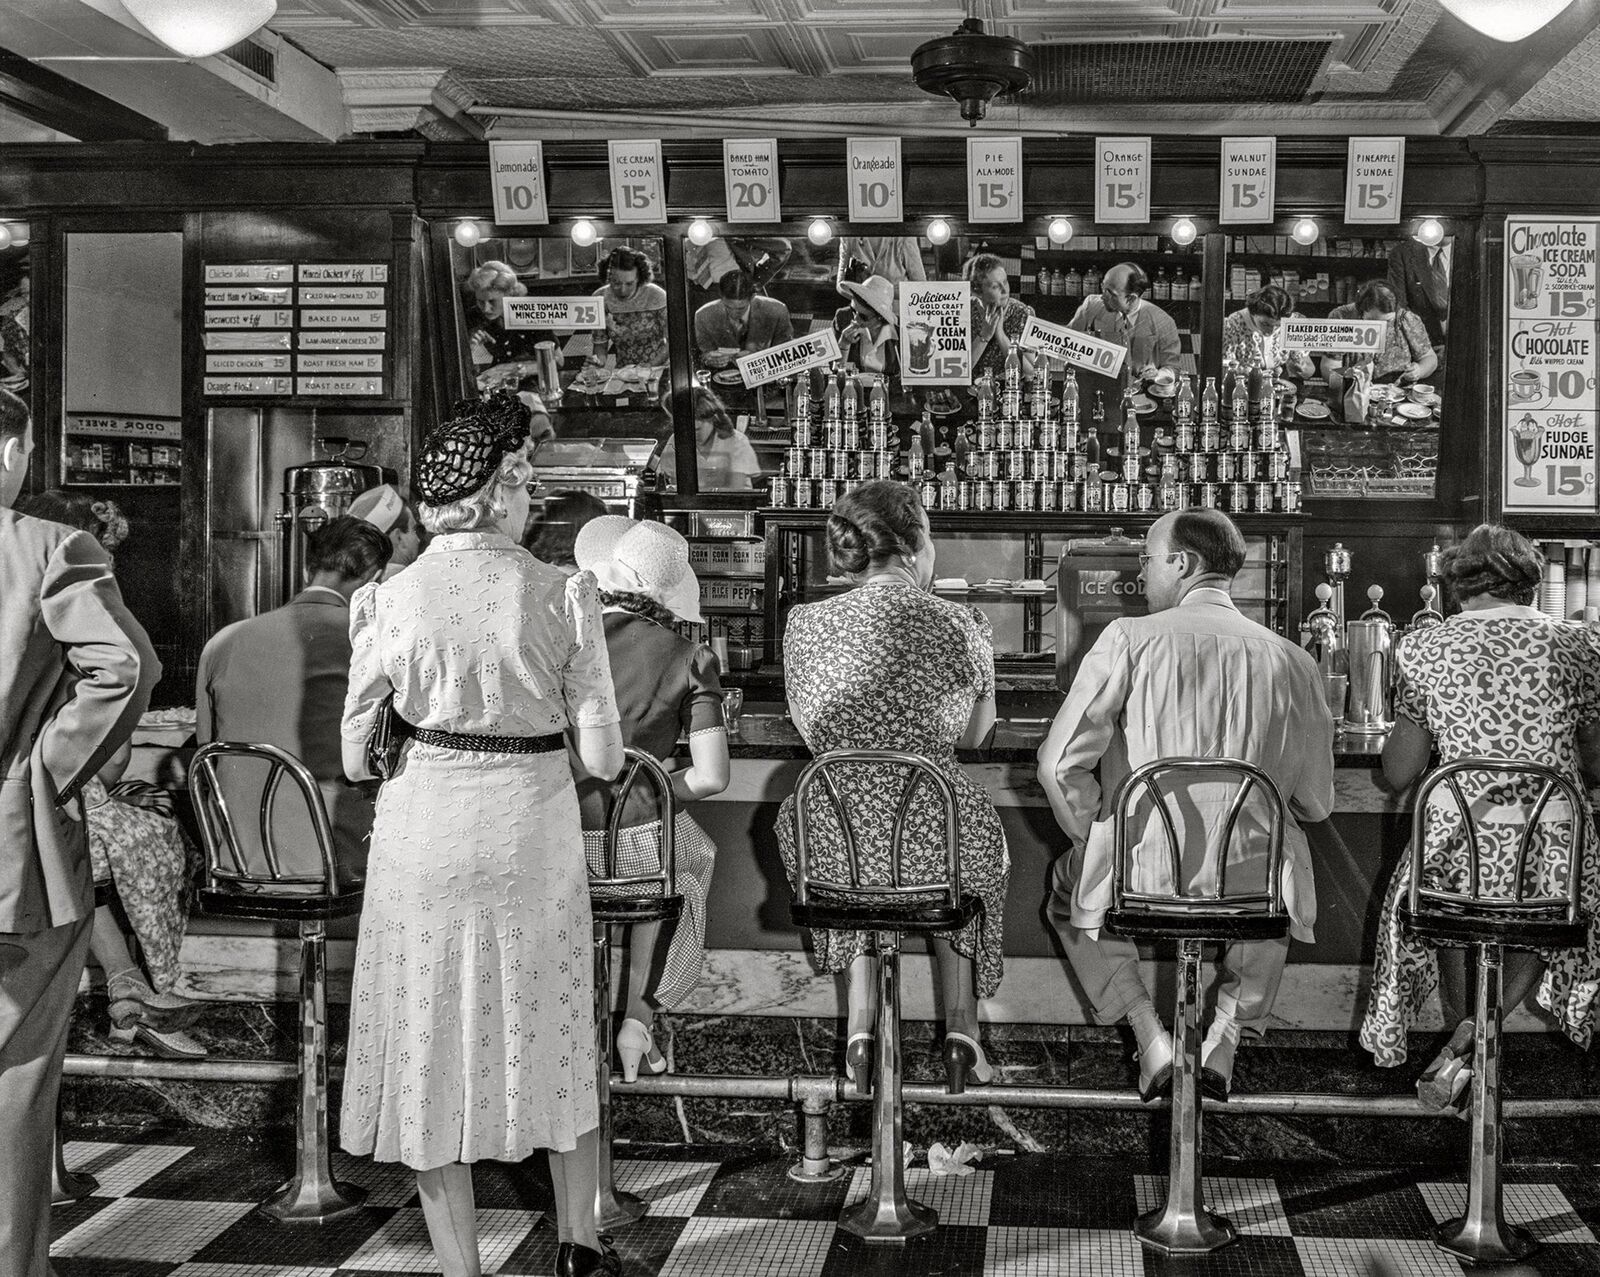 1942 WASHINGTON D.C. SODA FOUNTAIN 8.5x11 PHOTO